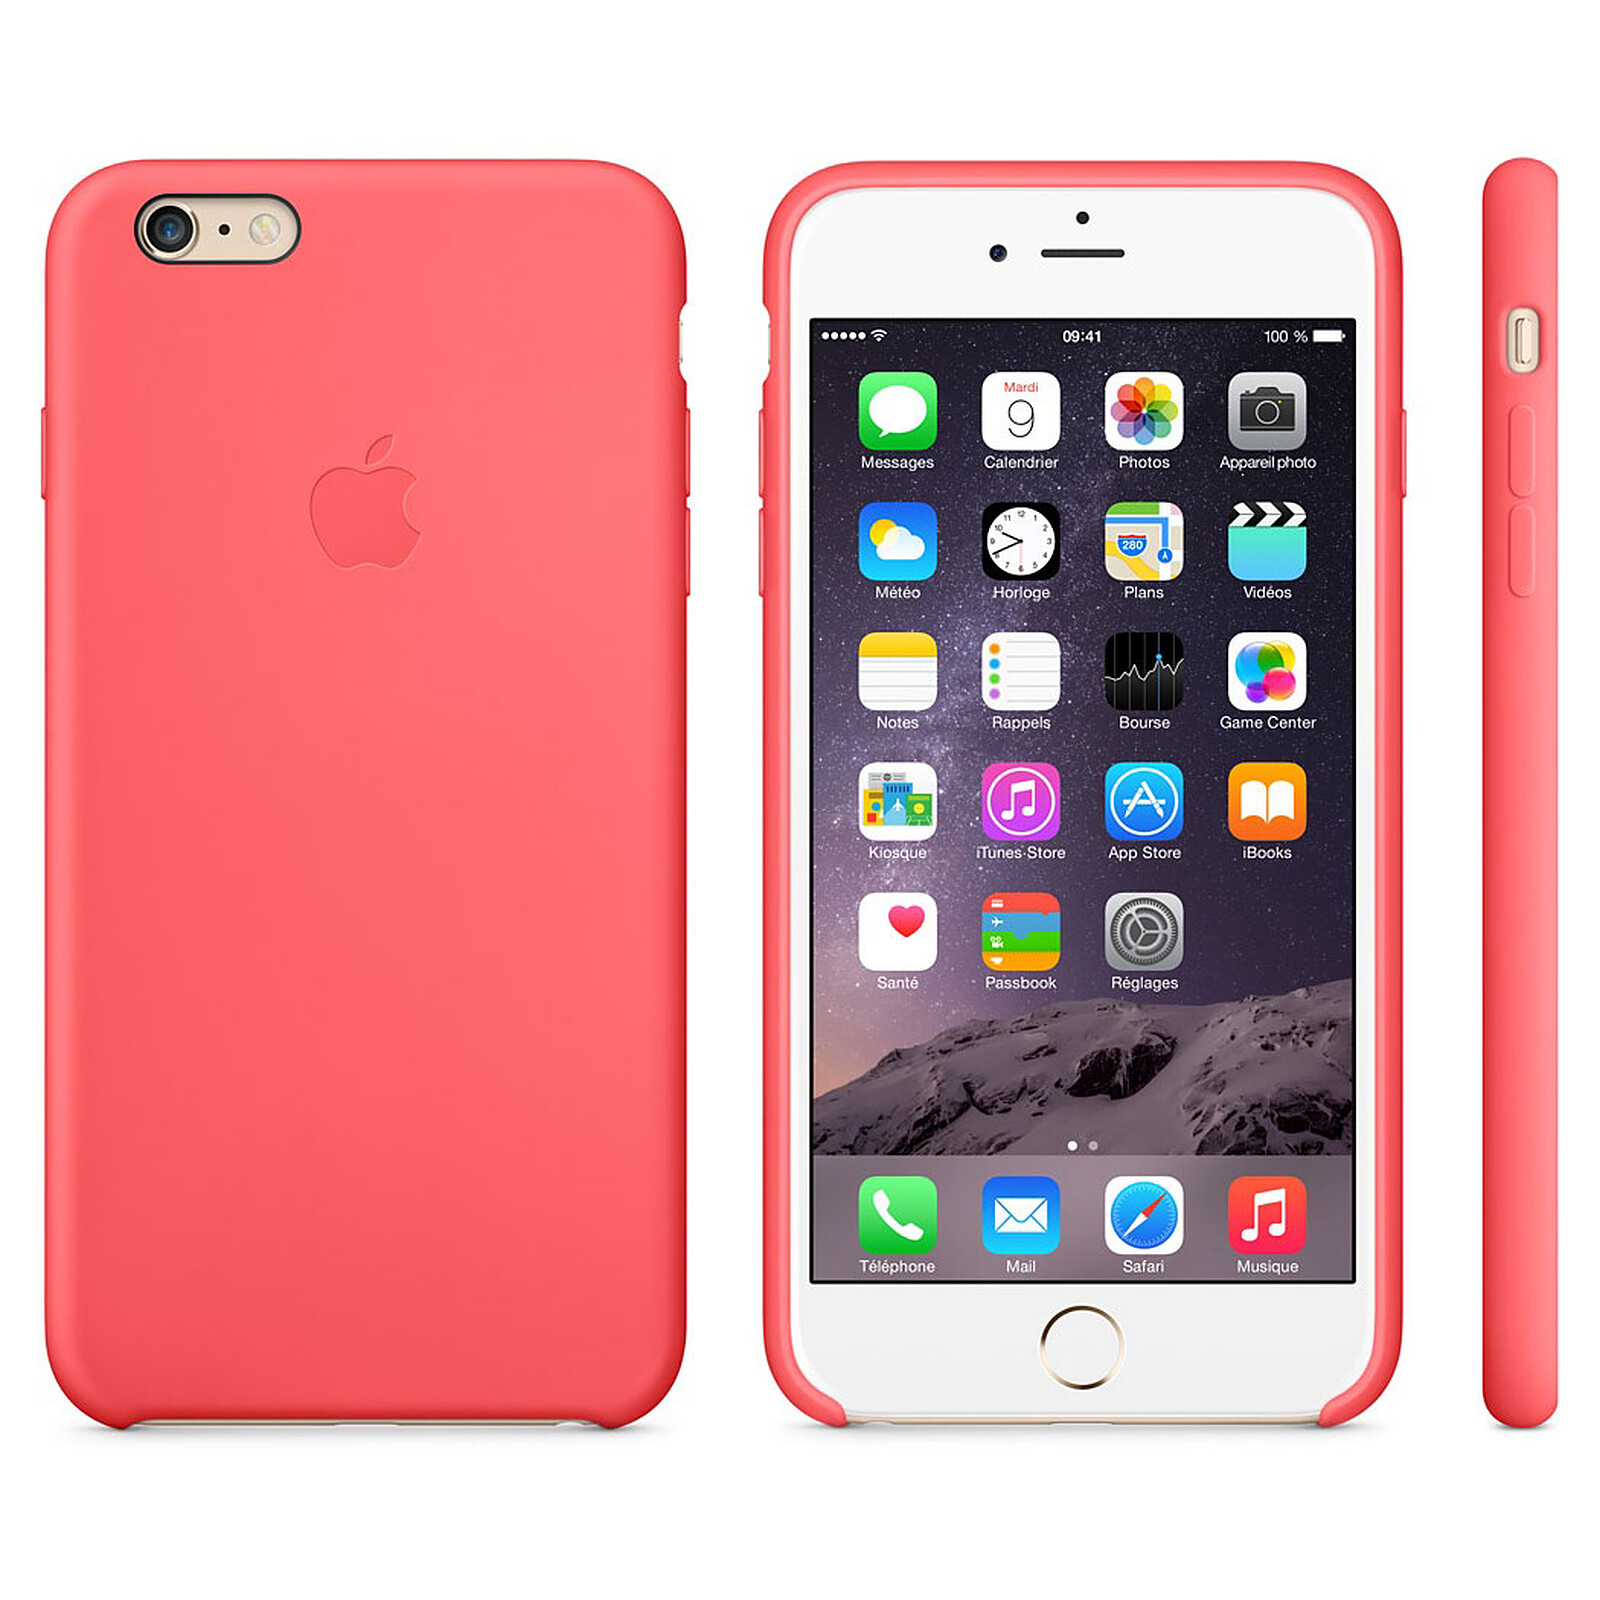 Телефоны айфоны цены фото. Apple iphone 6. Apple iphone 6s Plus. Iphone 6 и 6 Plus. Apple Leather Case iphone 6s Plus.